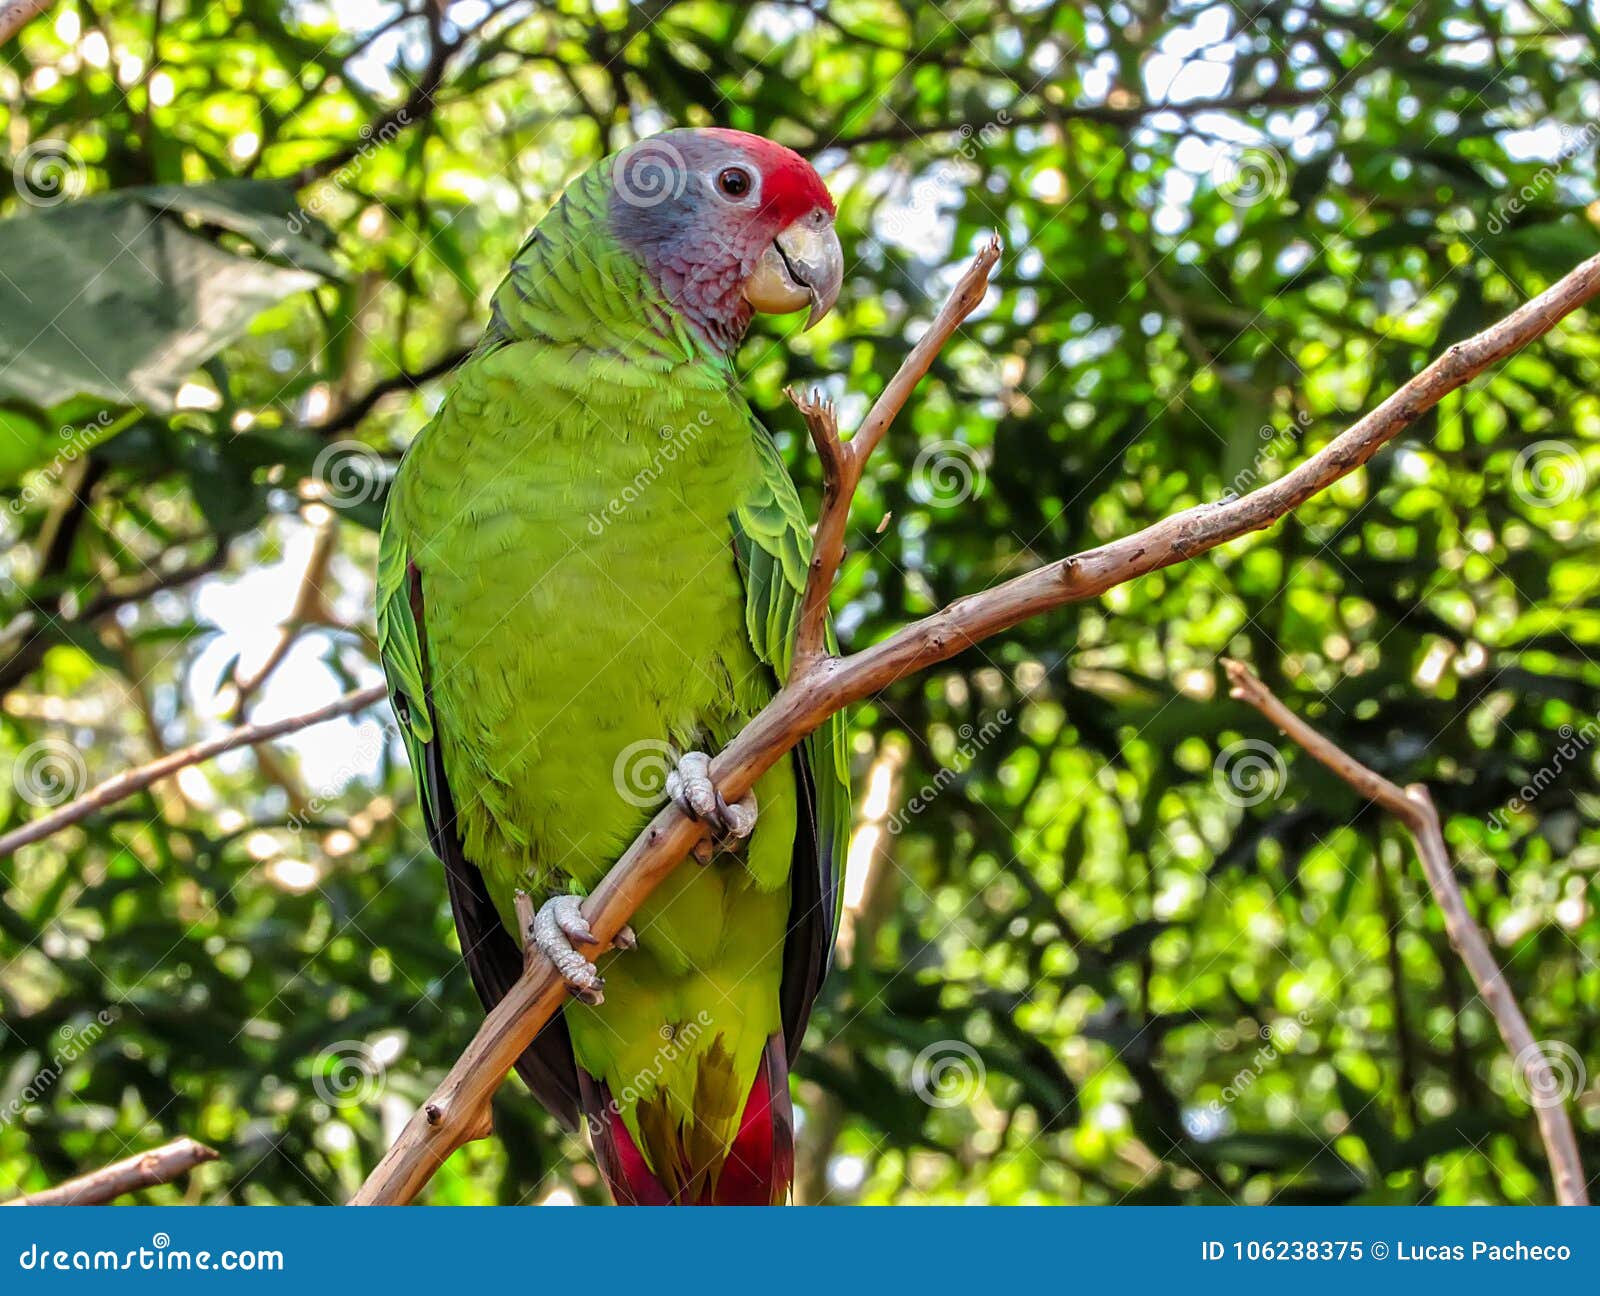 extinction threatened red-tailed amazon parrot, amazona brasiliensis